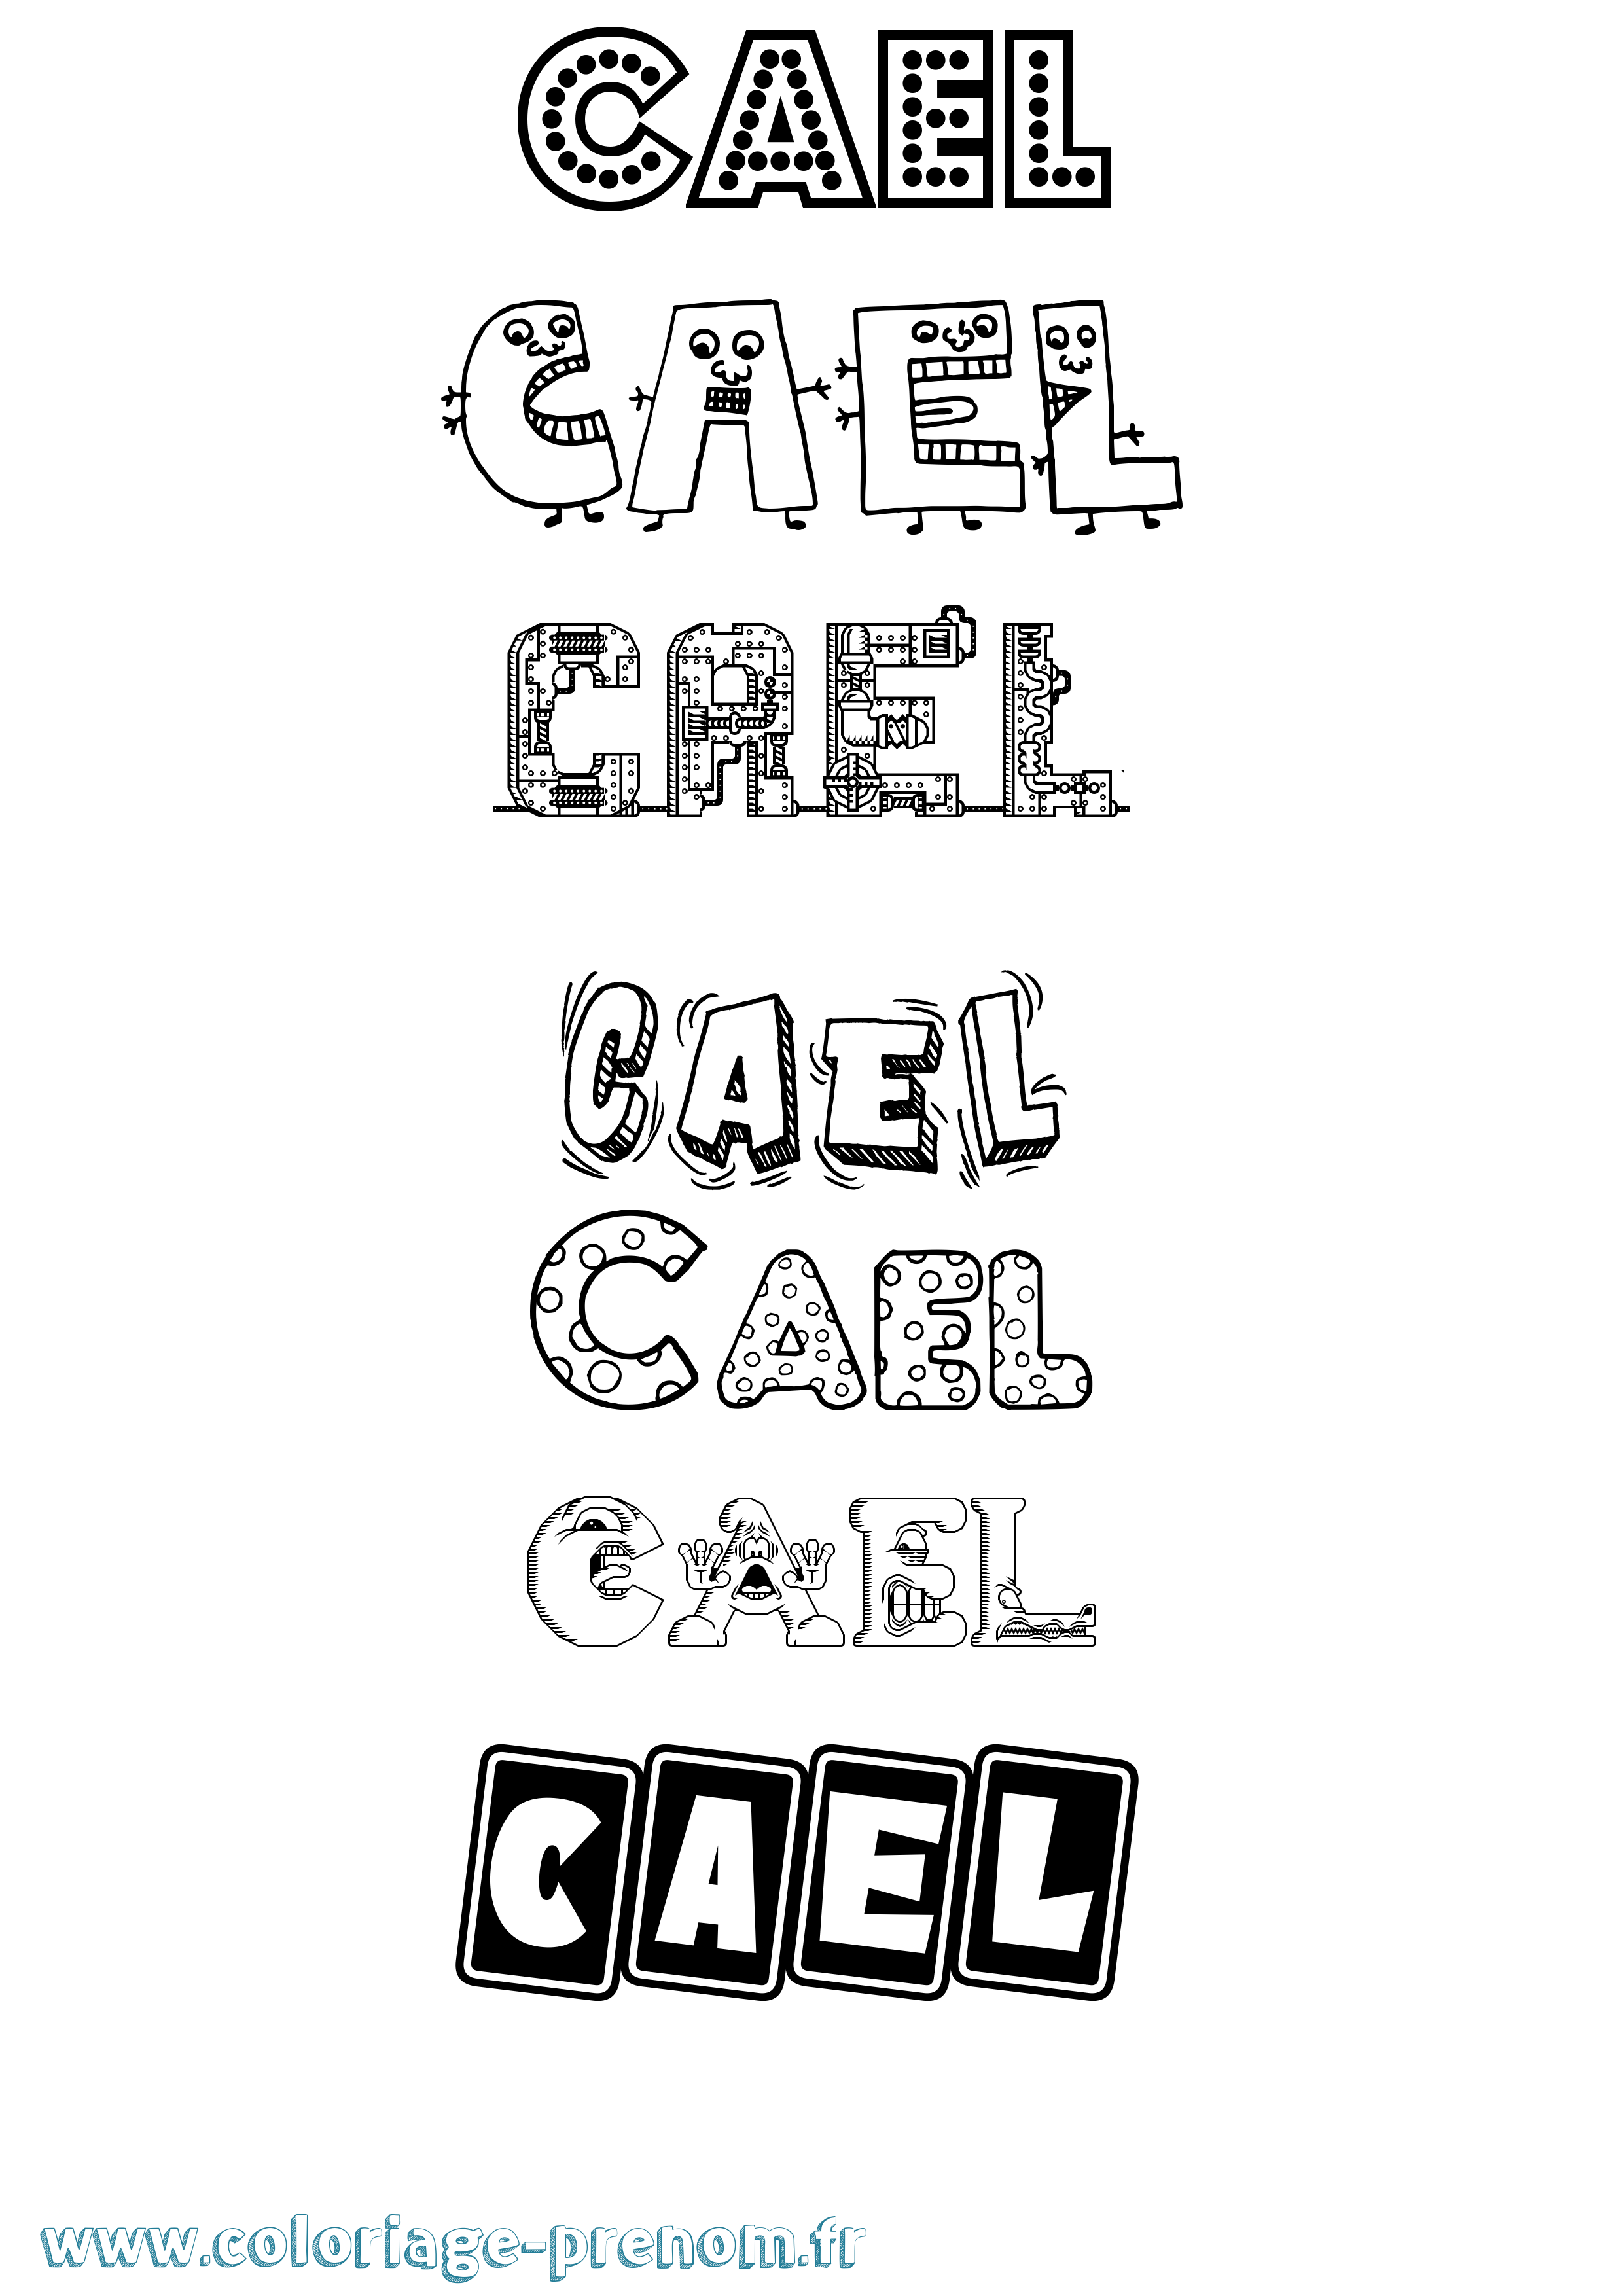 Coloriage prénom Cael Fun